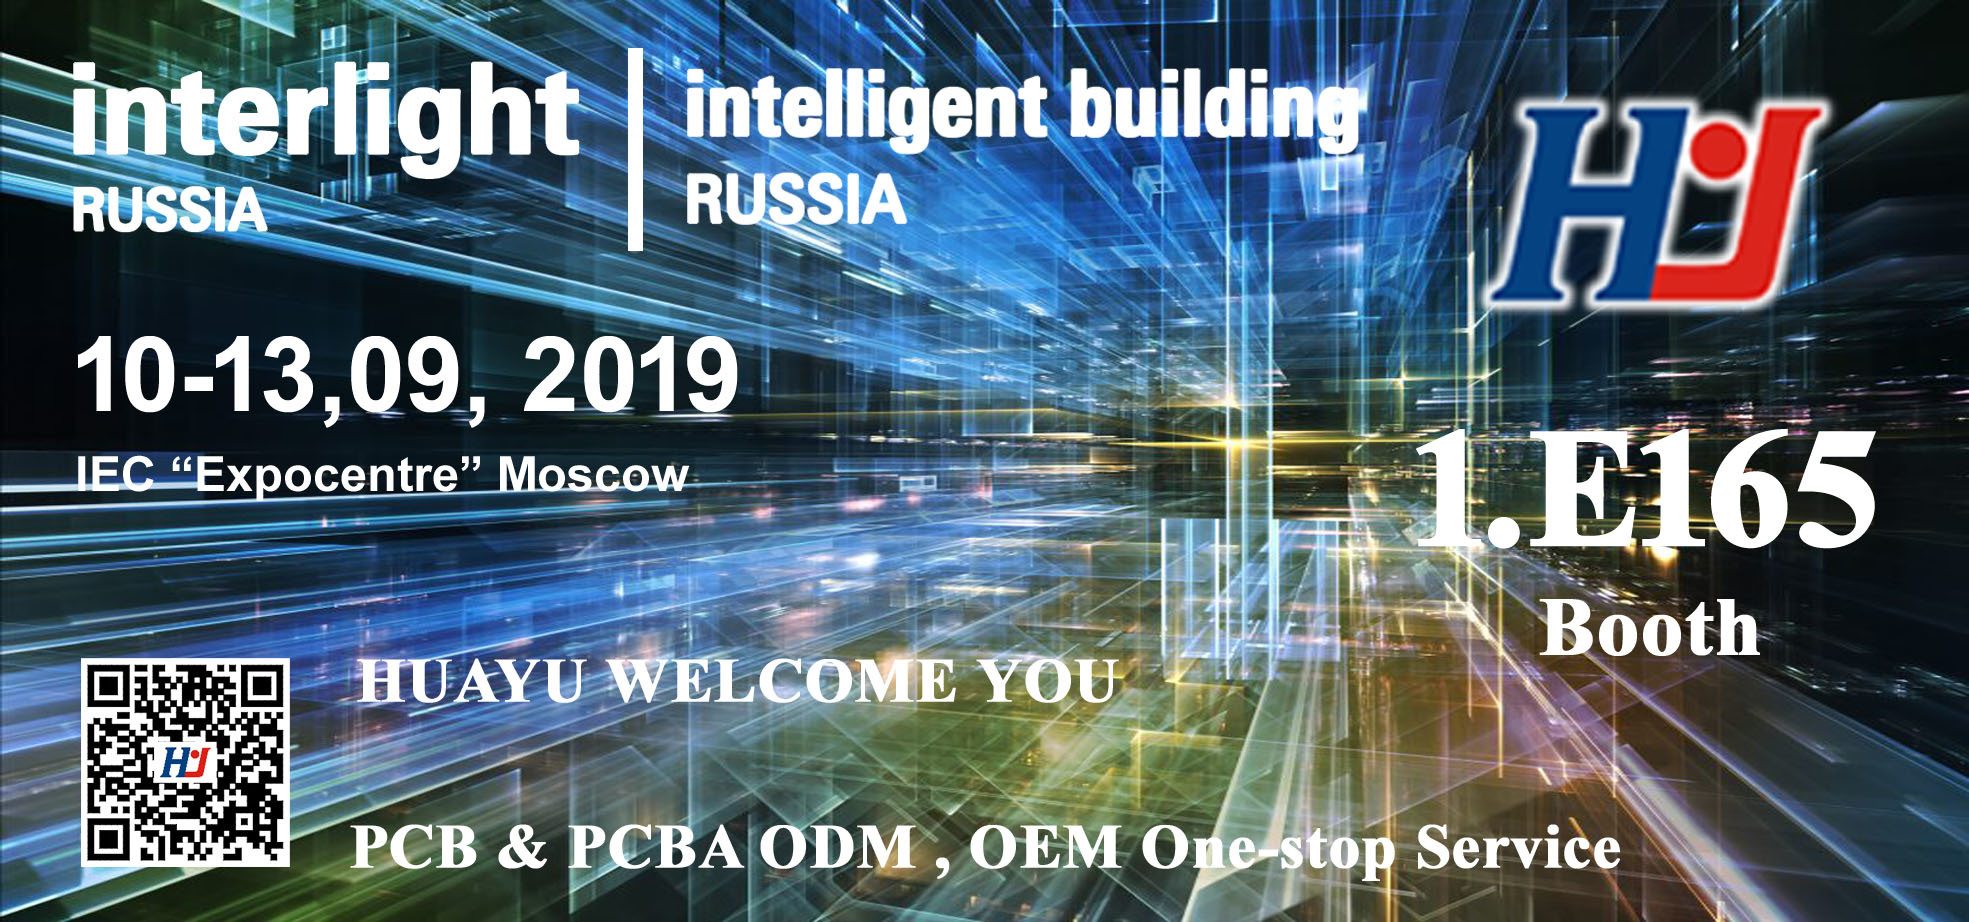 Interlight Moscow 2019